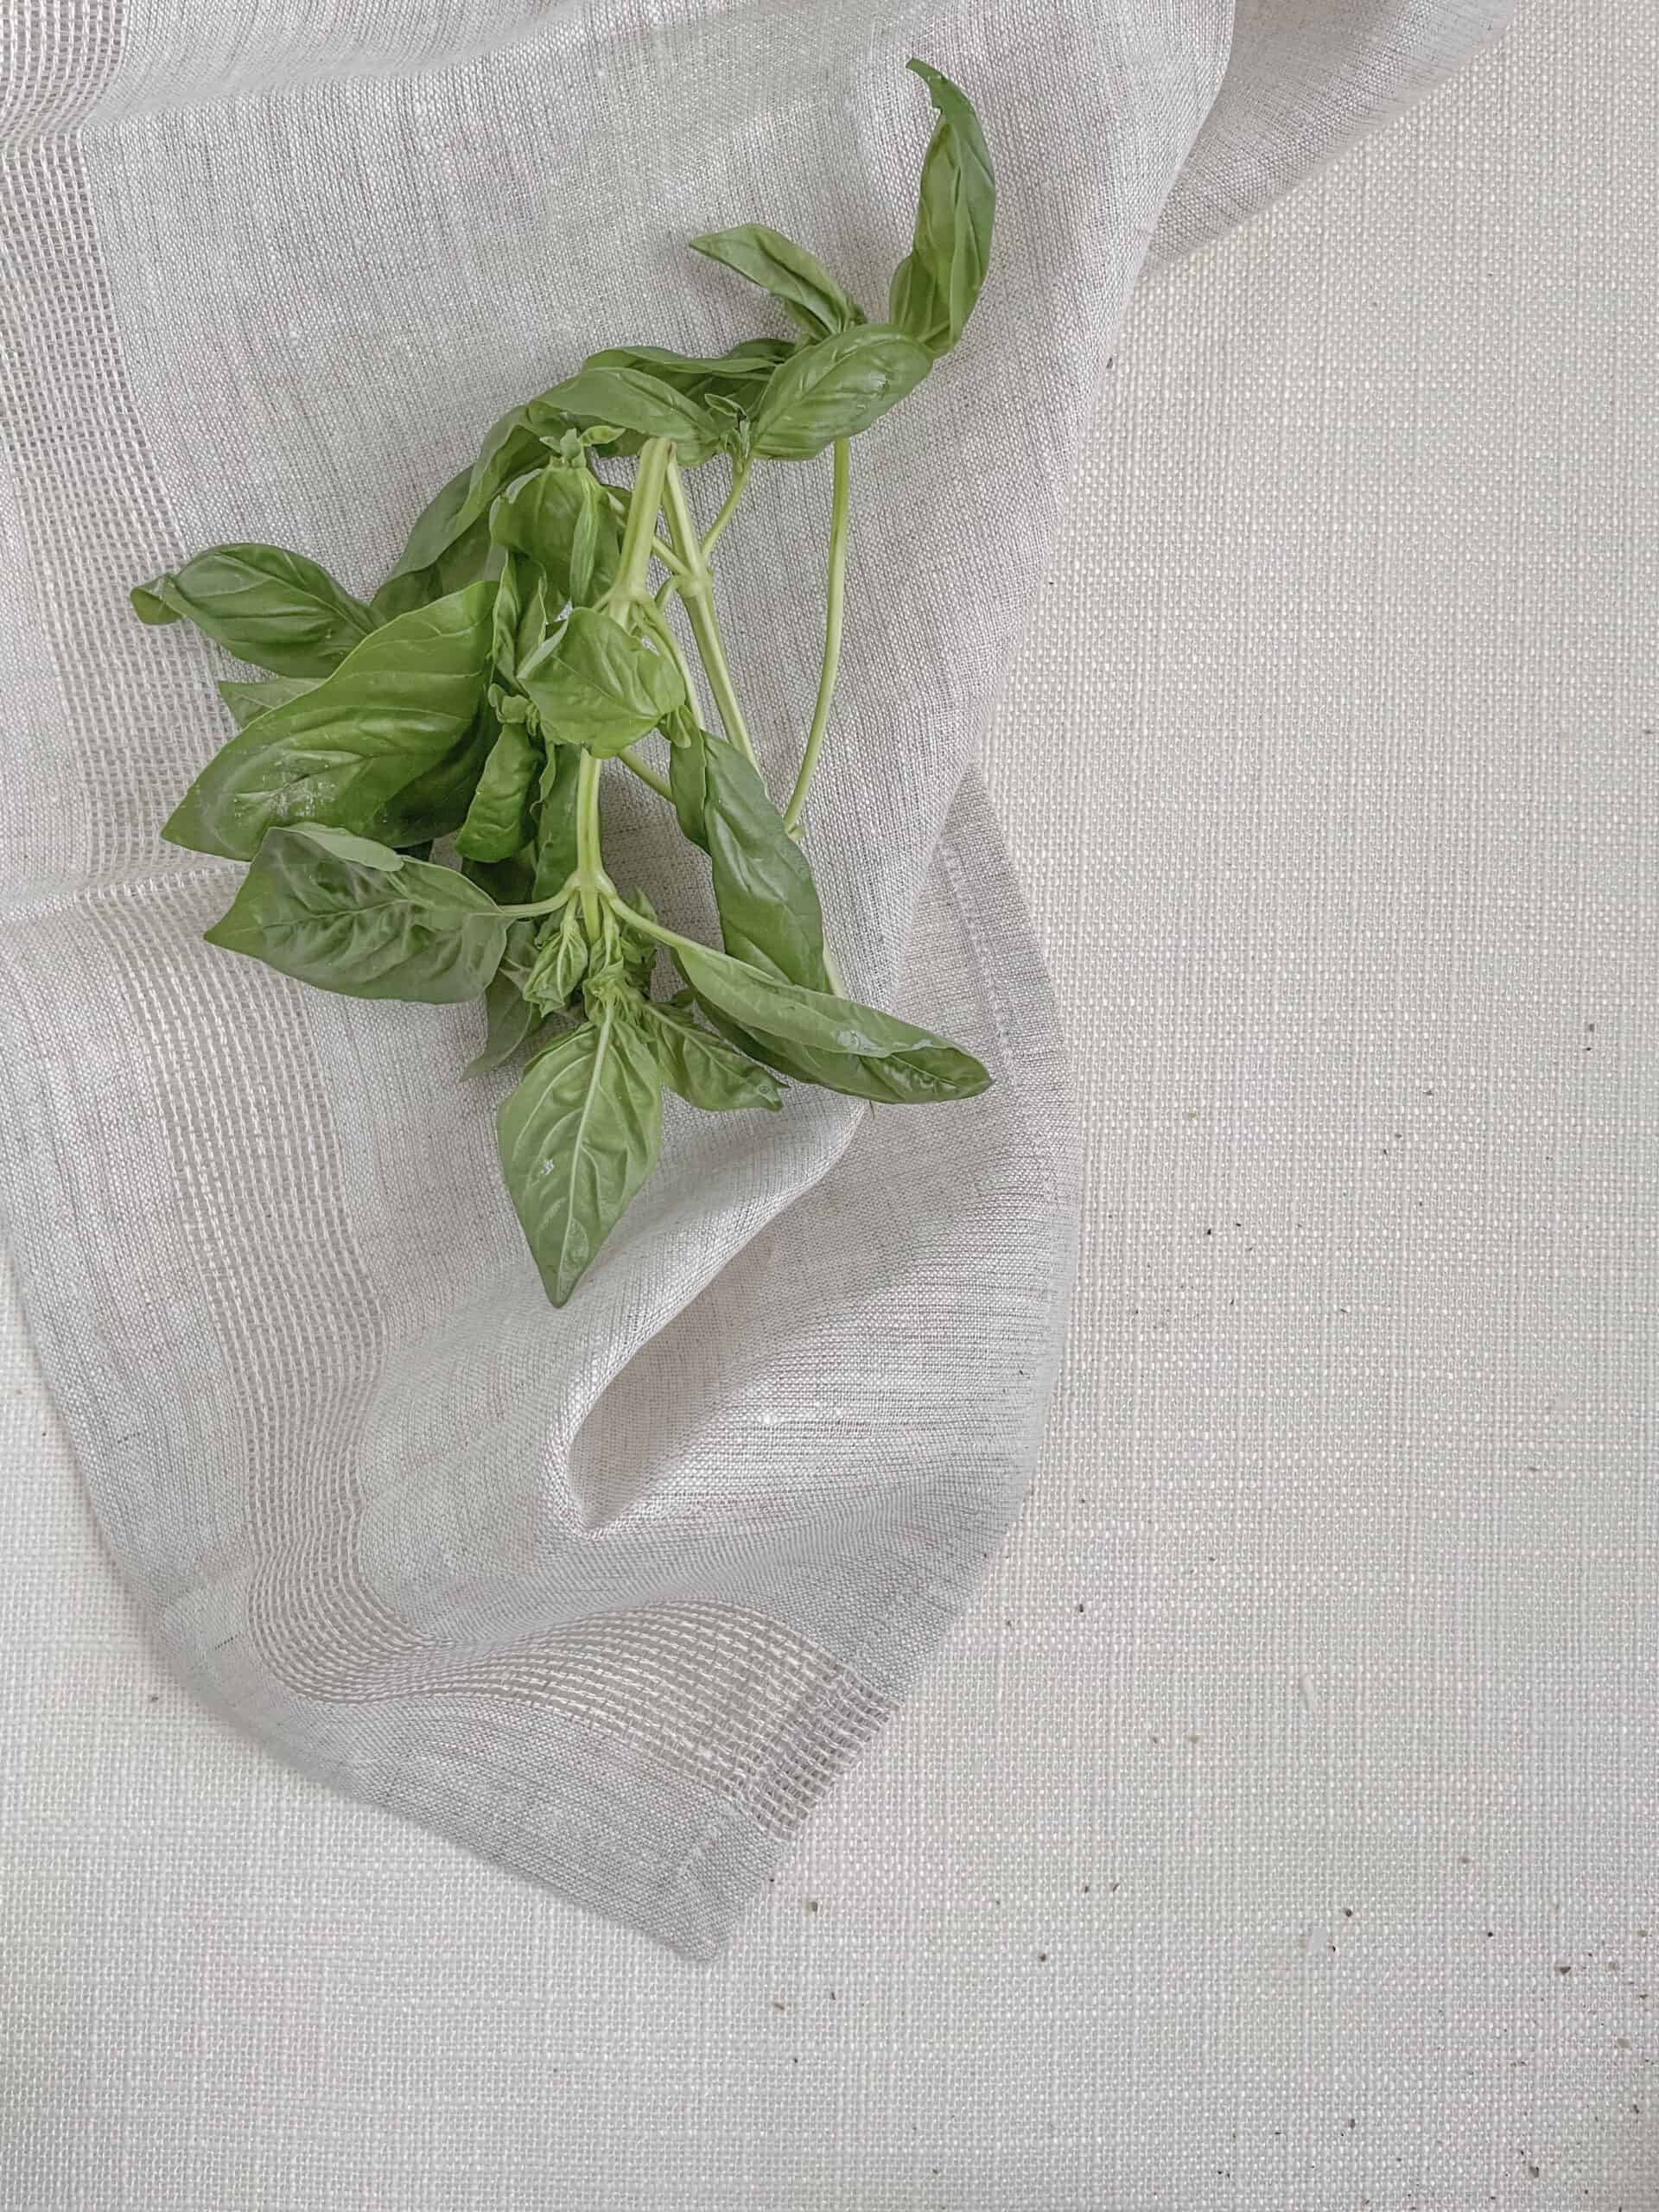 fresh basil on a white table cloth.